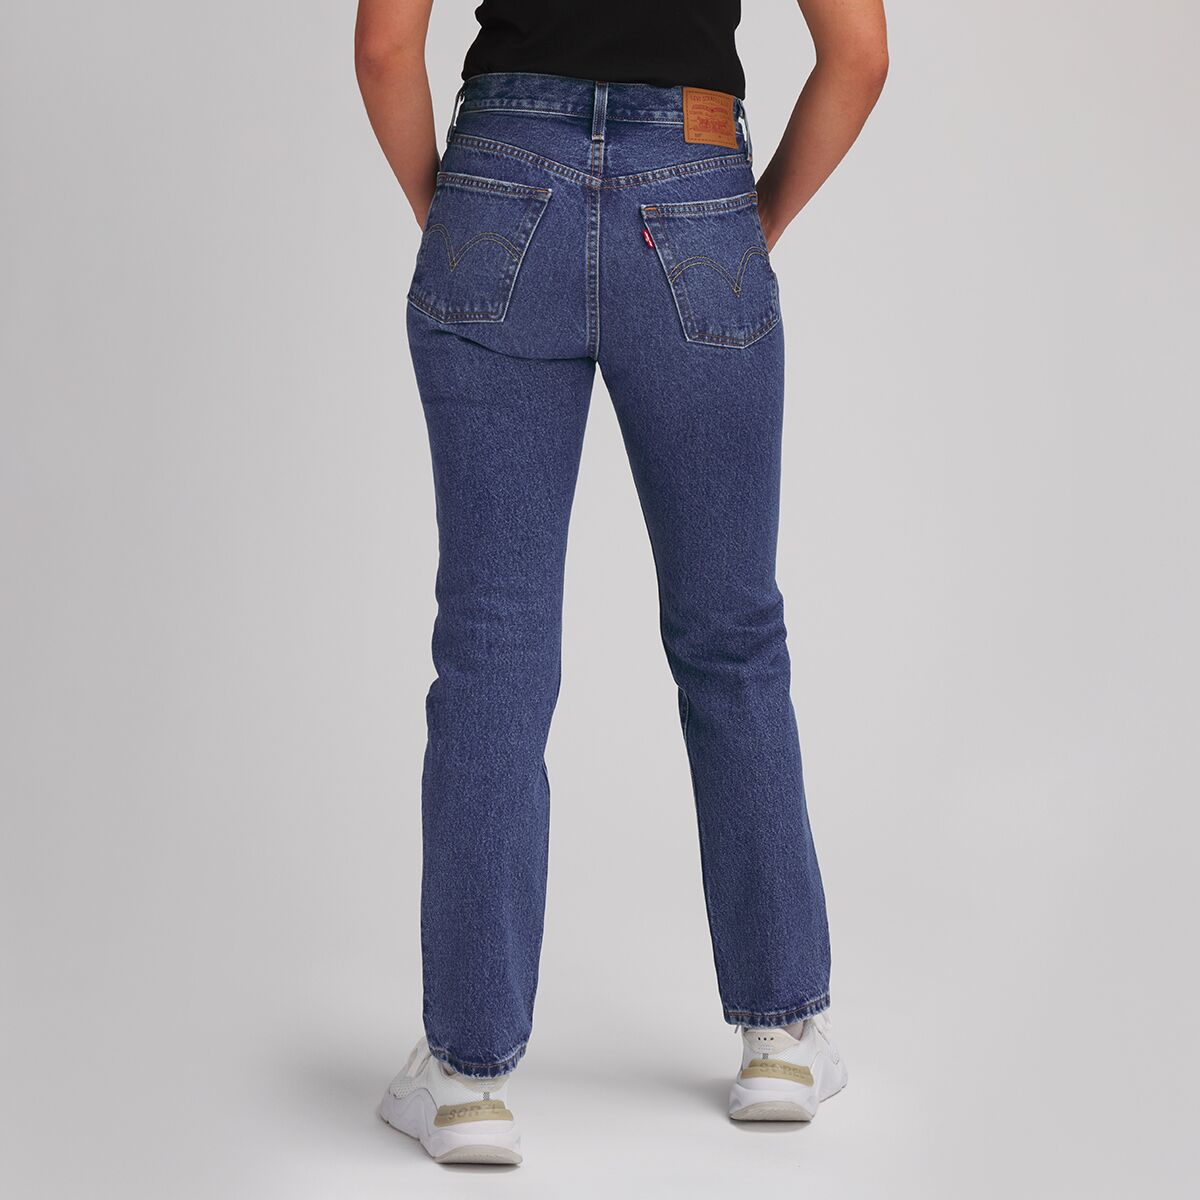 Levi's 501 Jean - Women's - Clothing